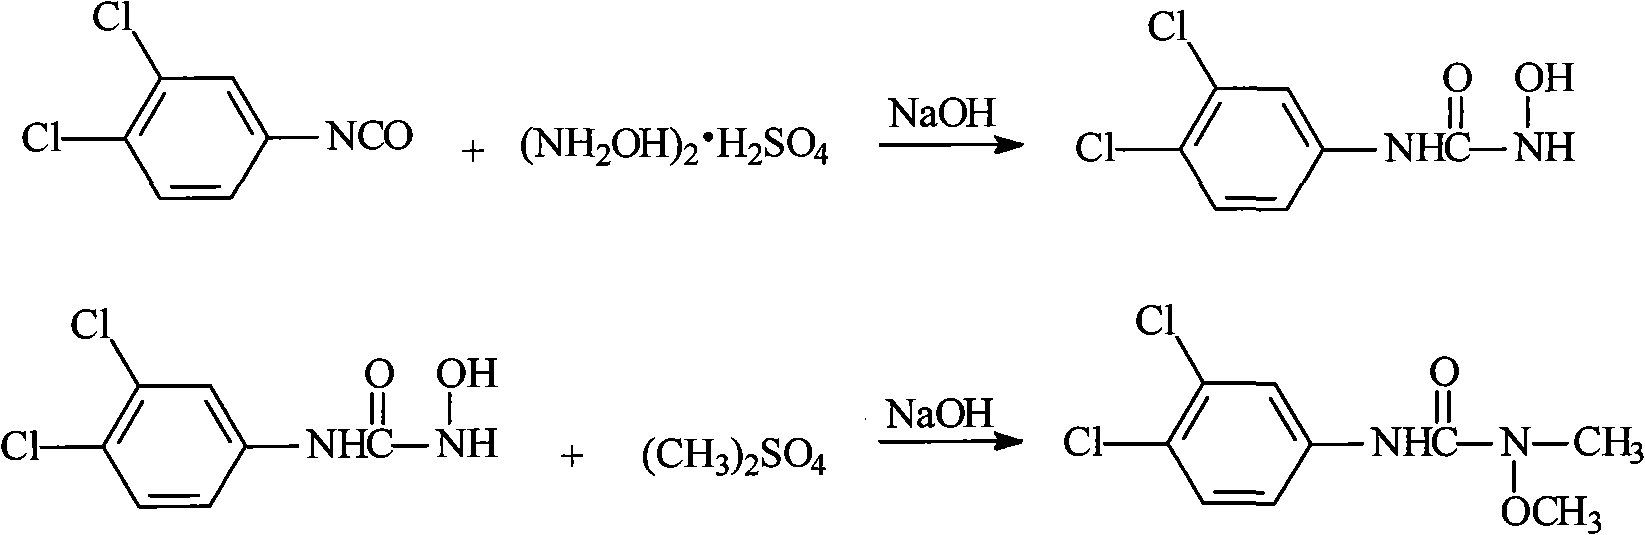 Method for preparing 3-(3,4-dichlorophenyl)-1-methoxy-1-methyl urea